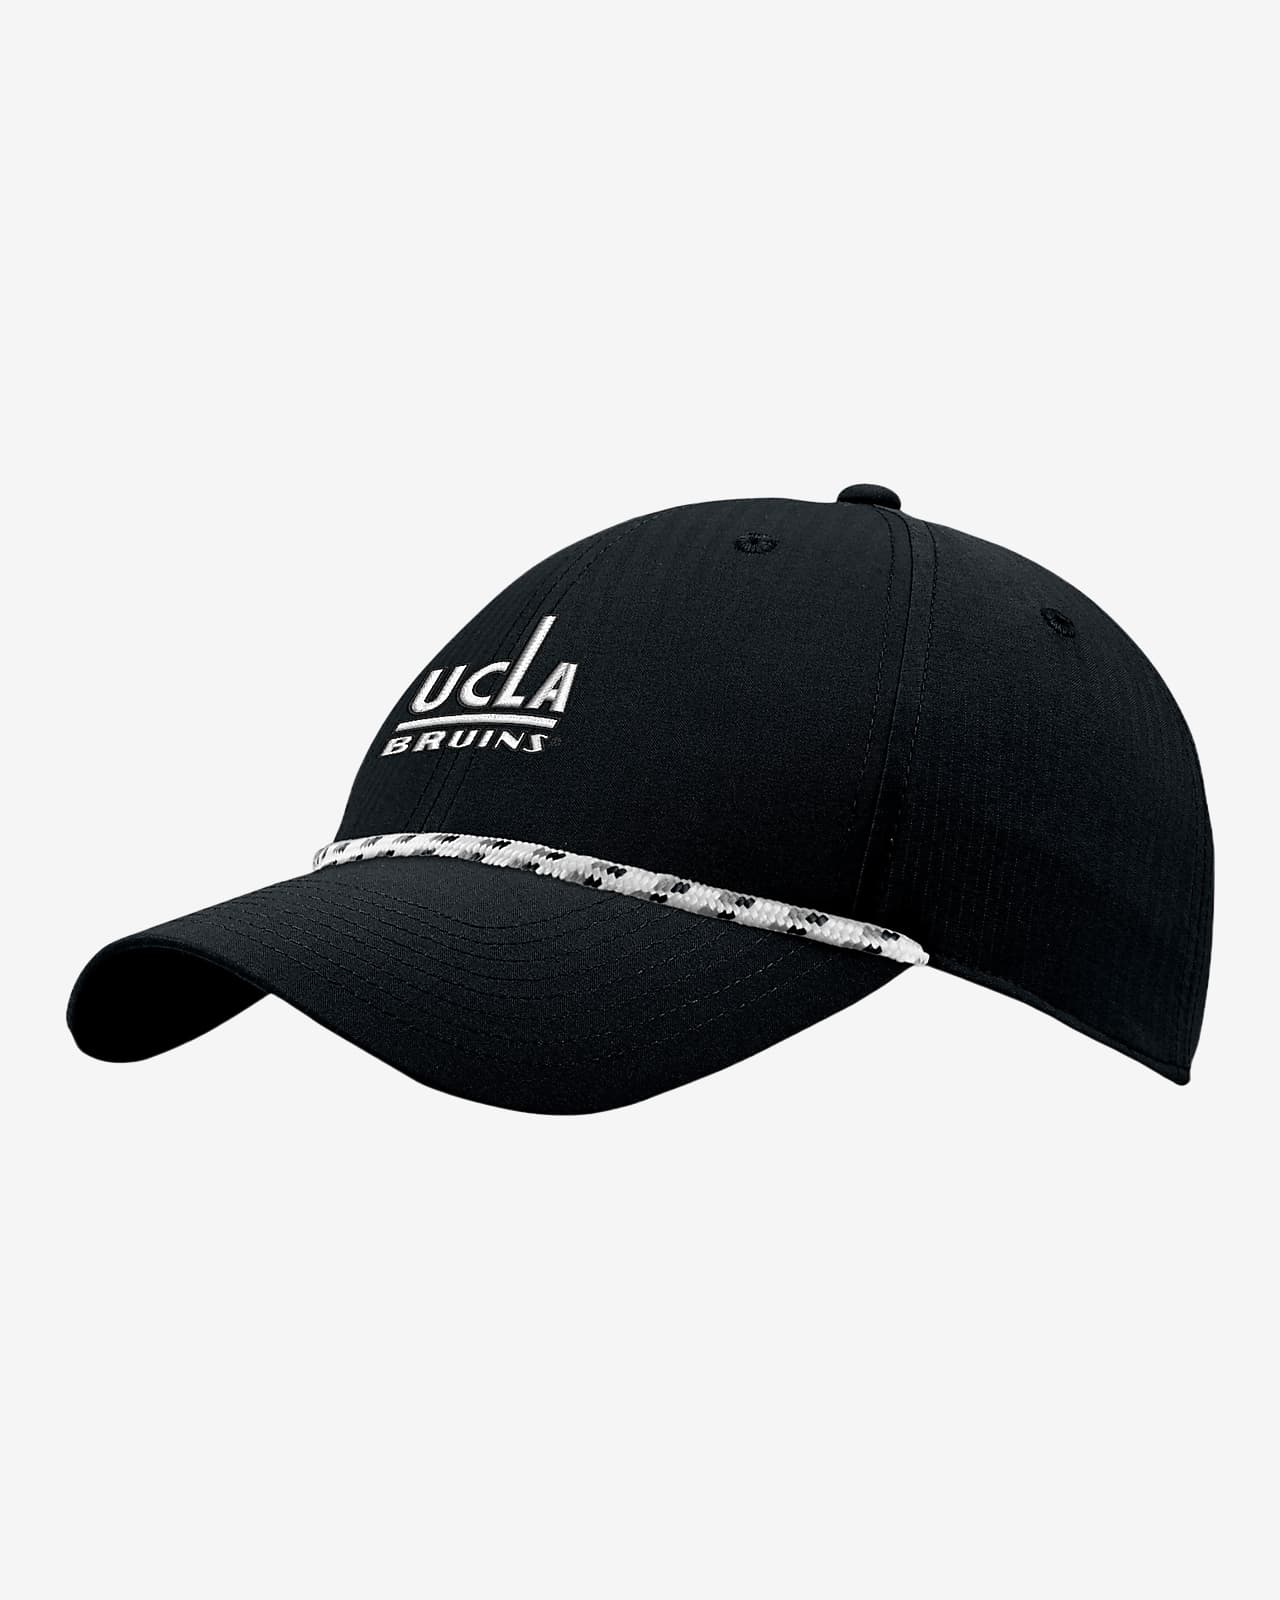 UCLA Legacy91 Nike College Rope Hat